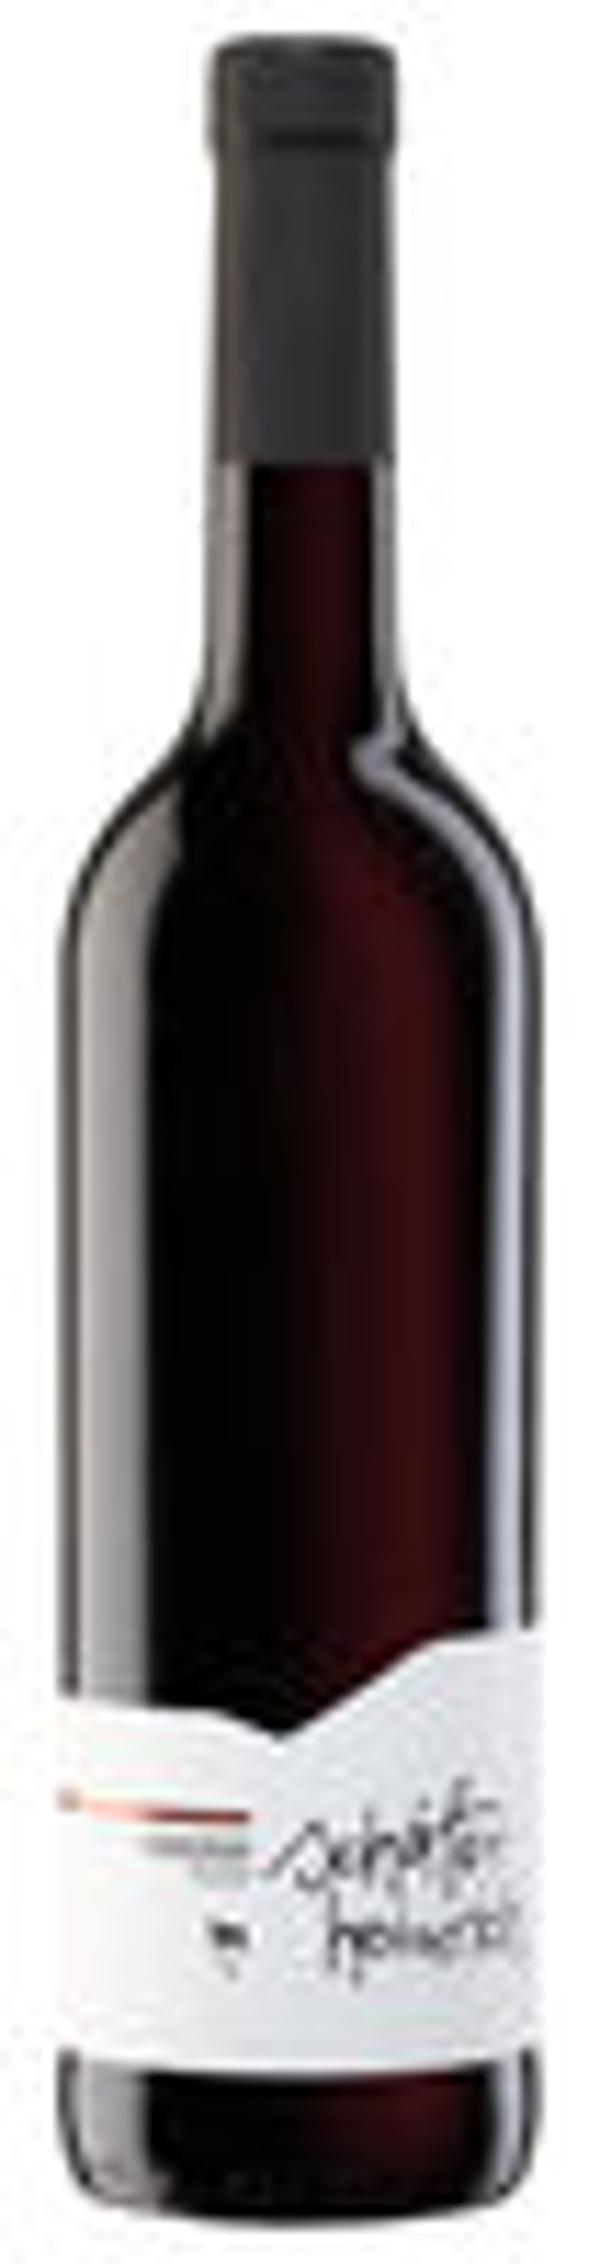 Produktfoto zu Lemberger Rotwein 0,75L